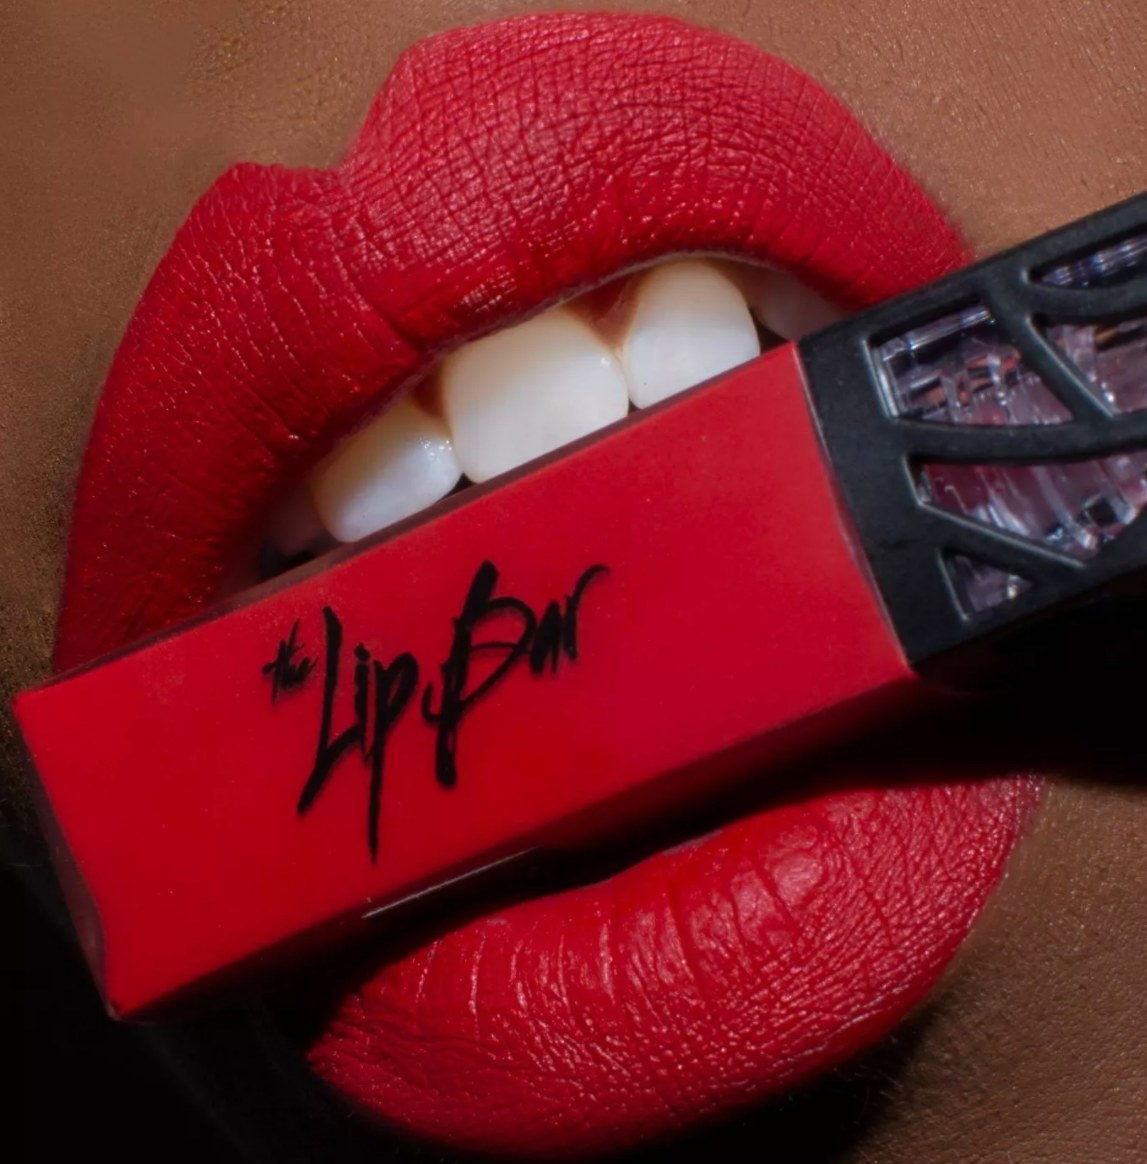 model holding Lip Bar lipstick between lips